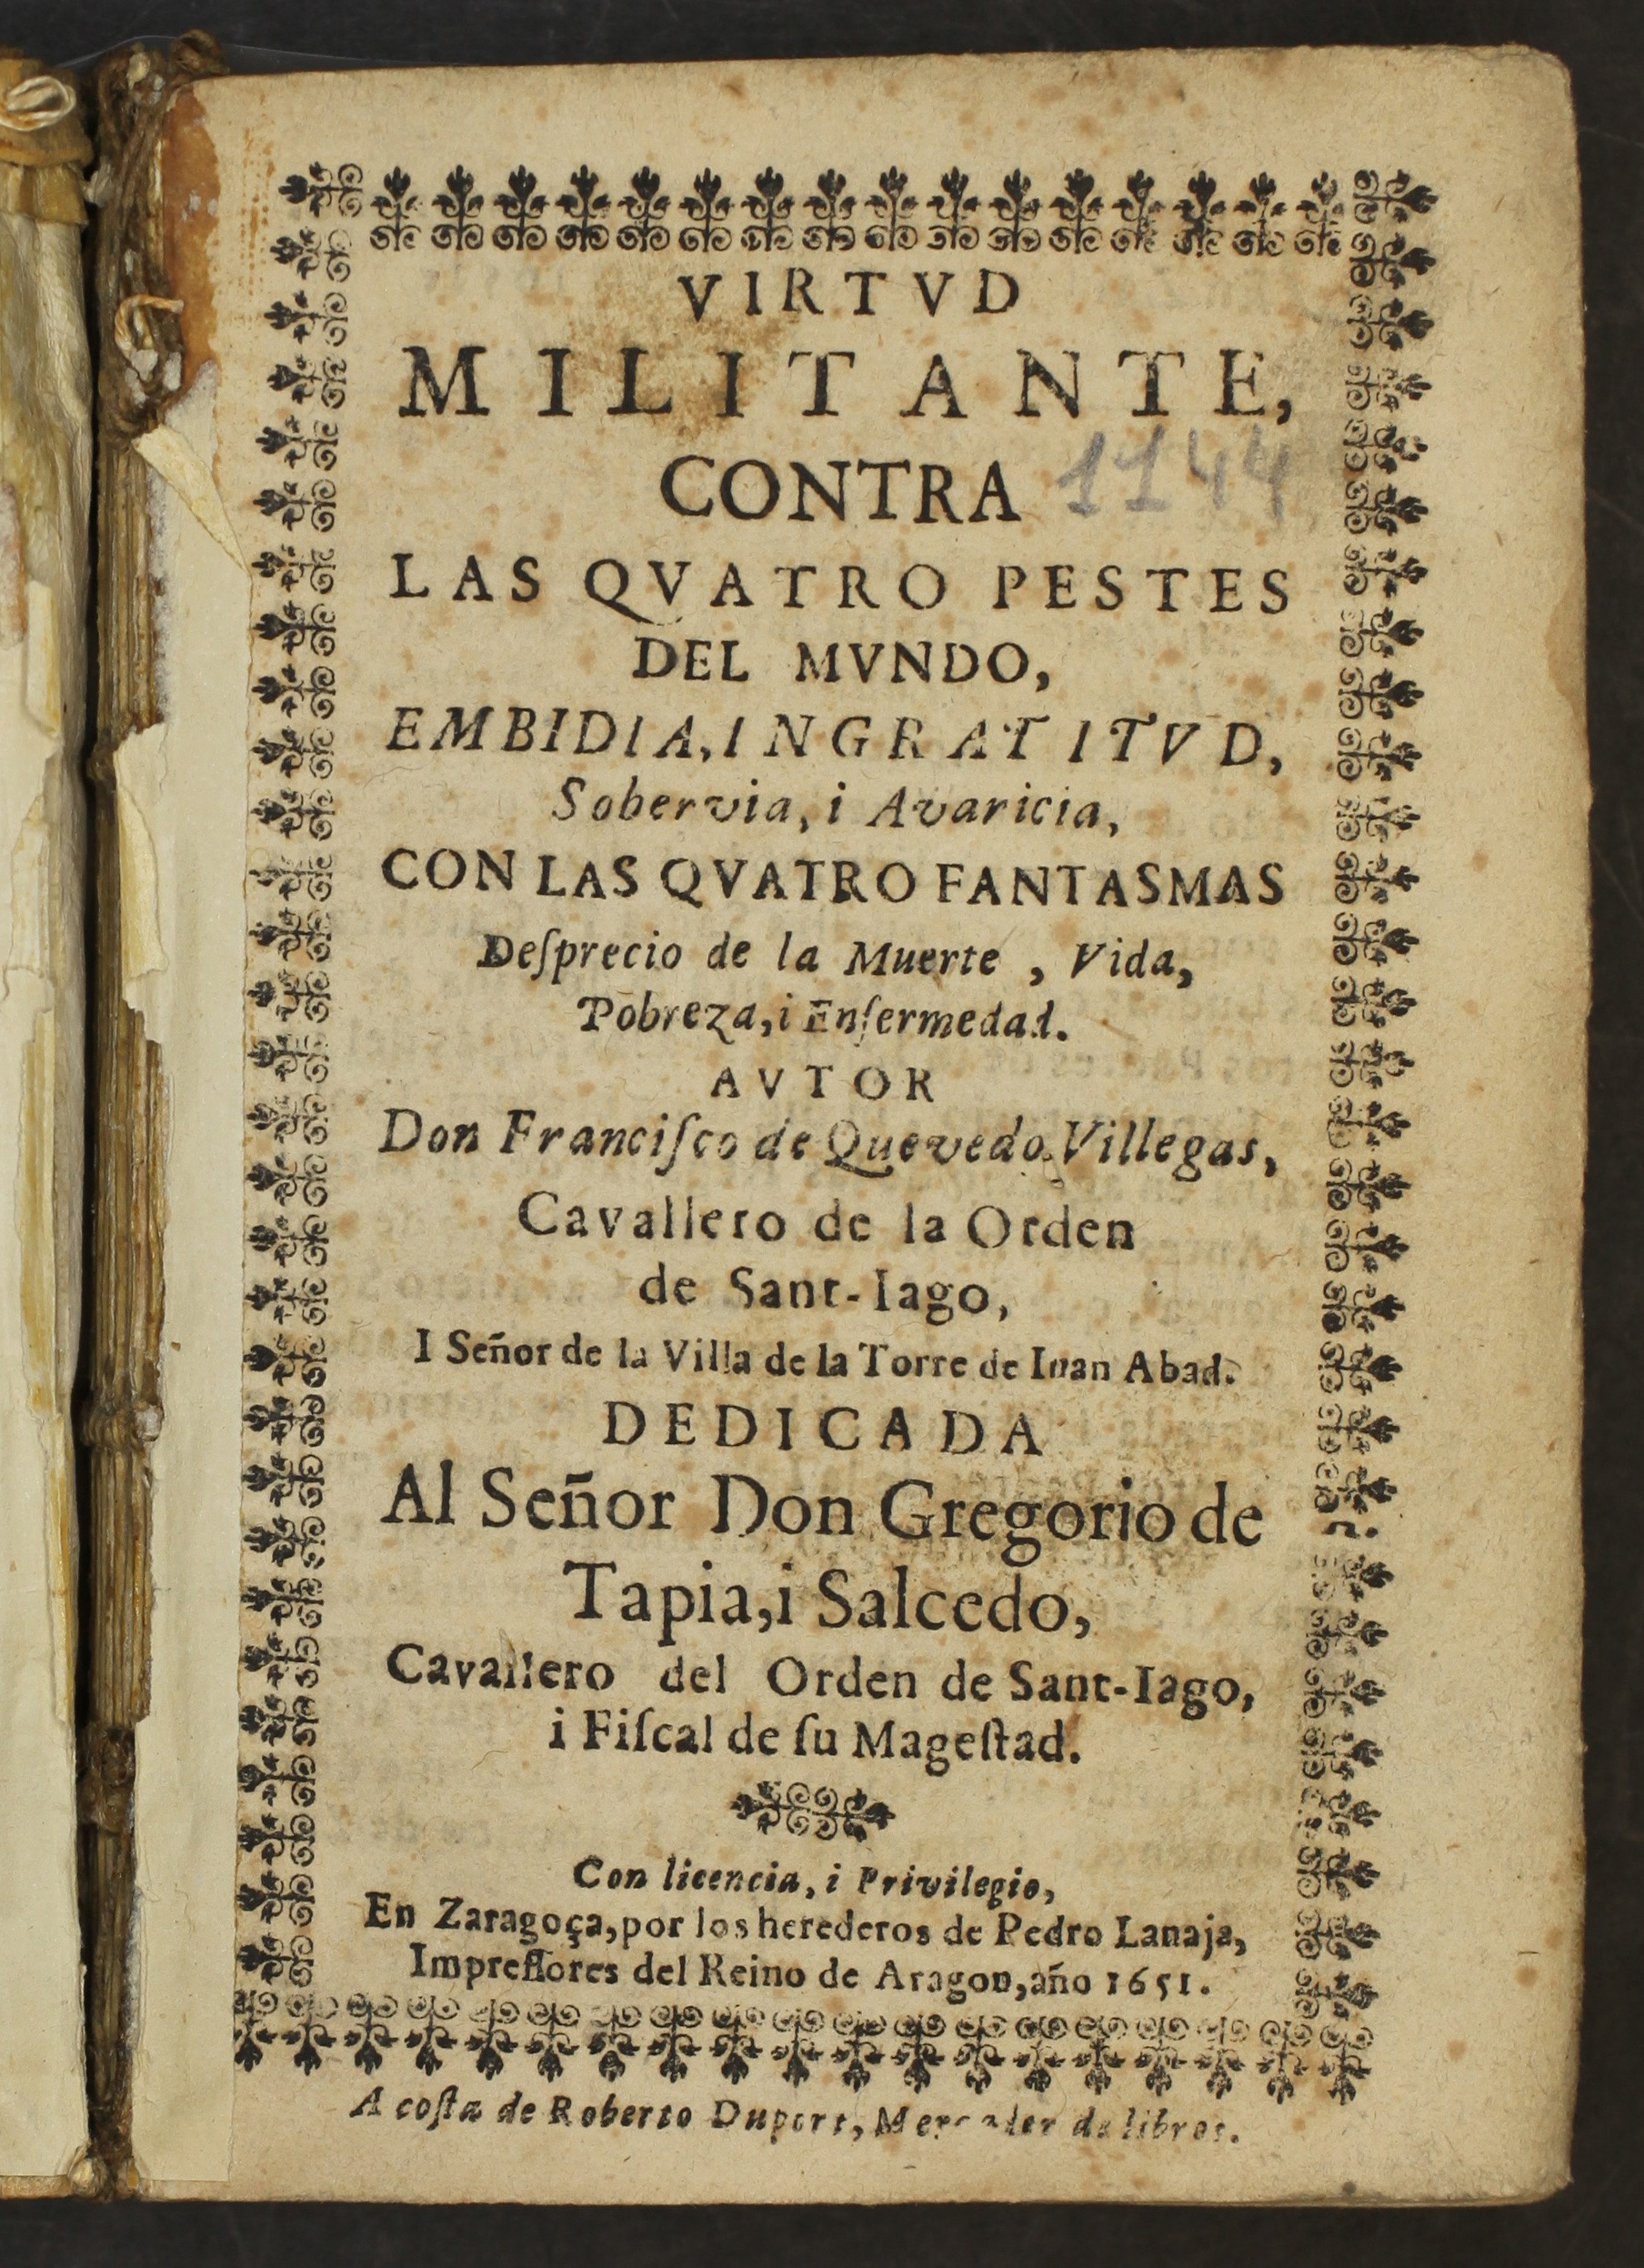 Virtud militante, contra las quatro pestes del mundo, 1651